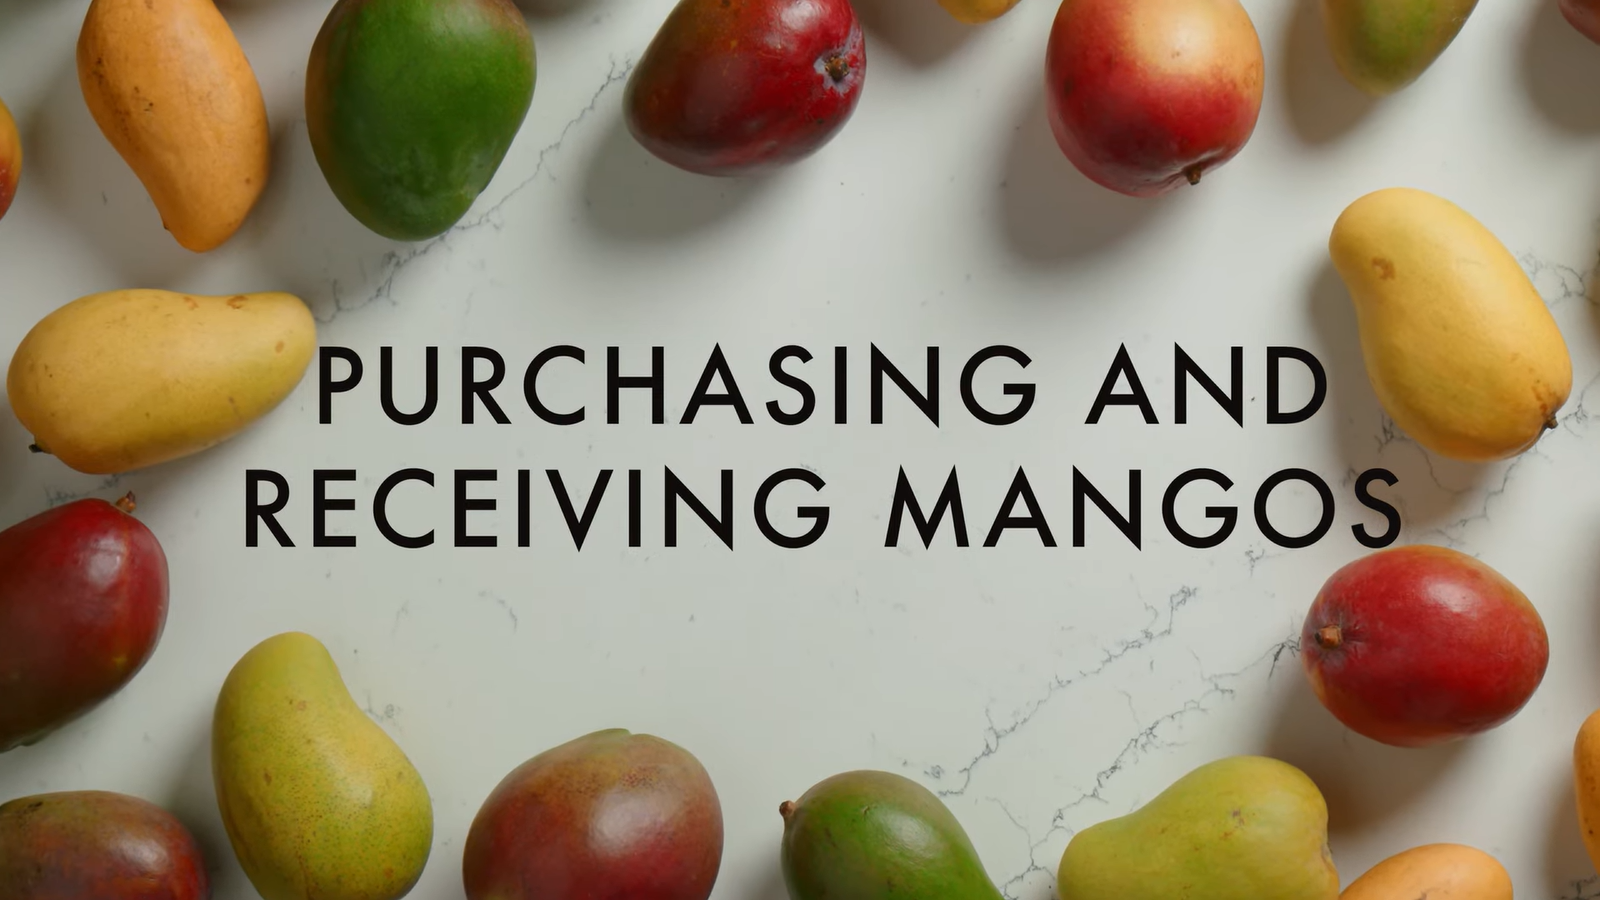 Mango Purchasing